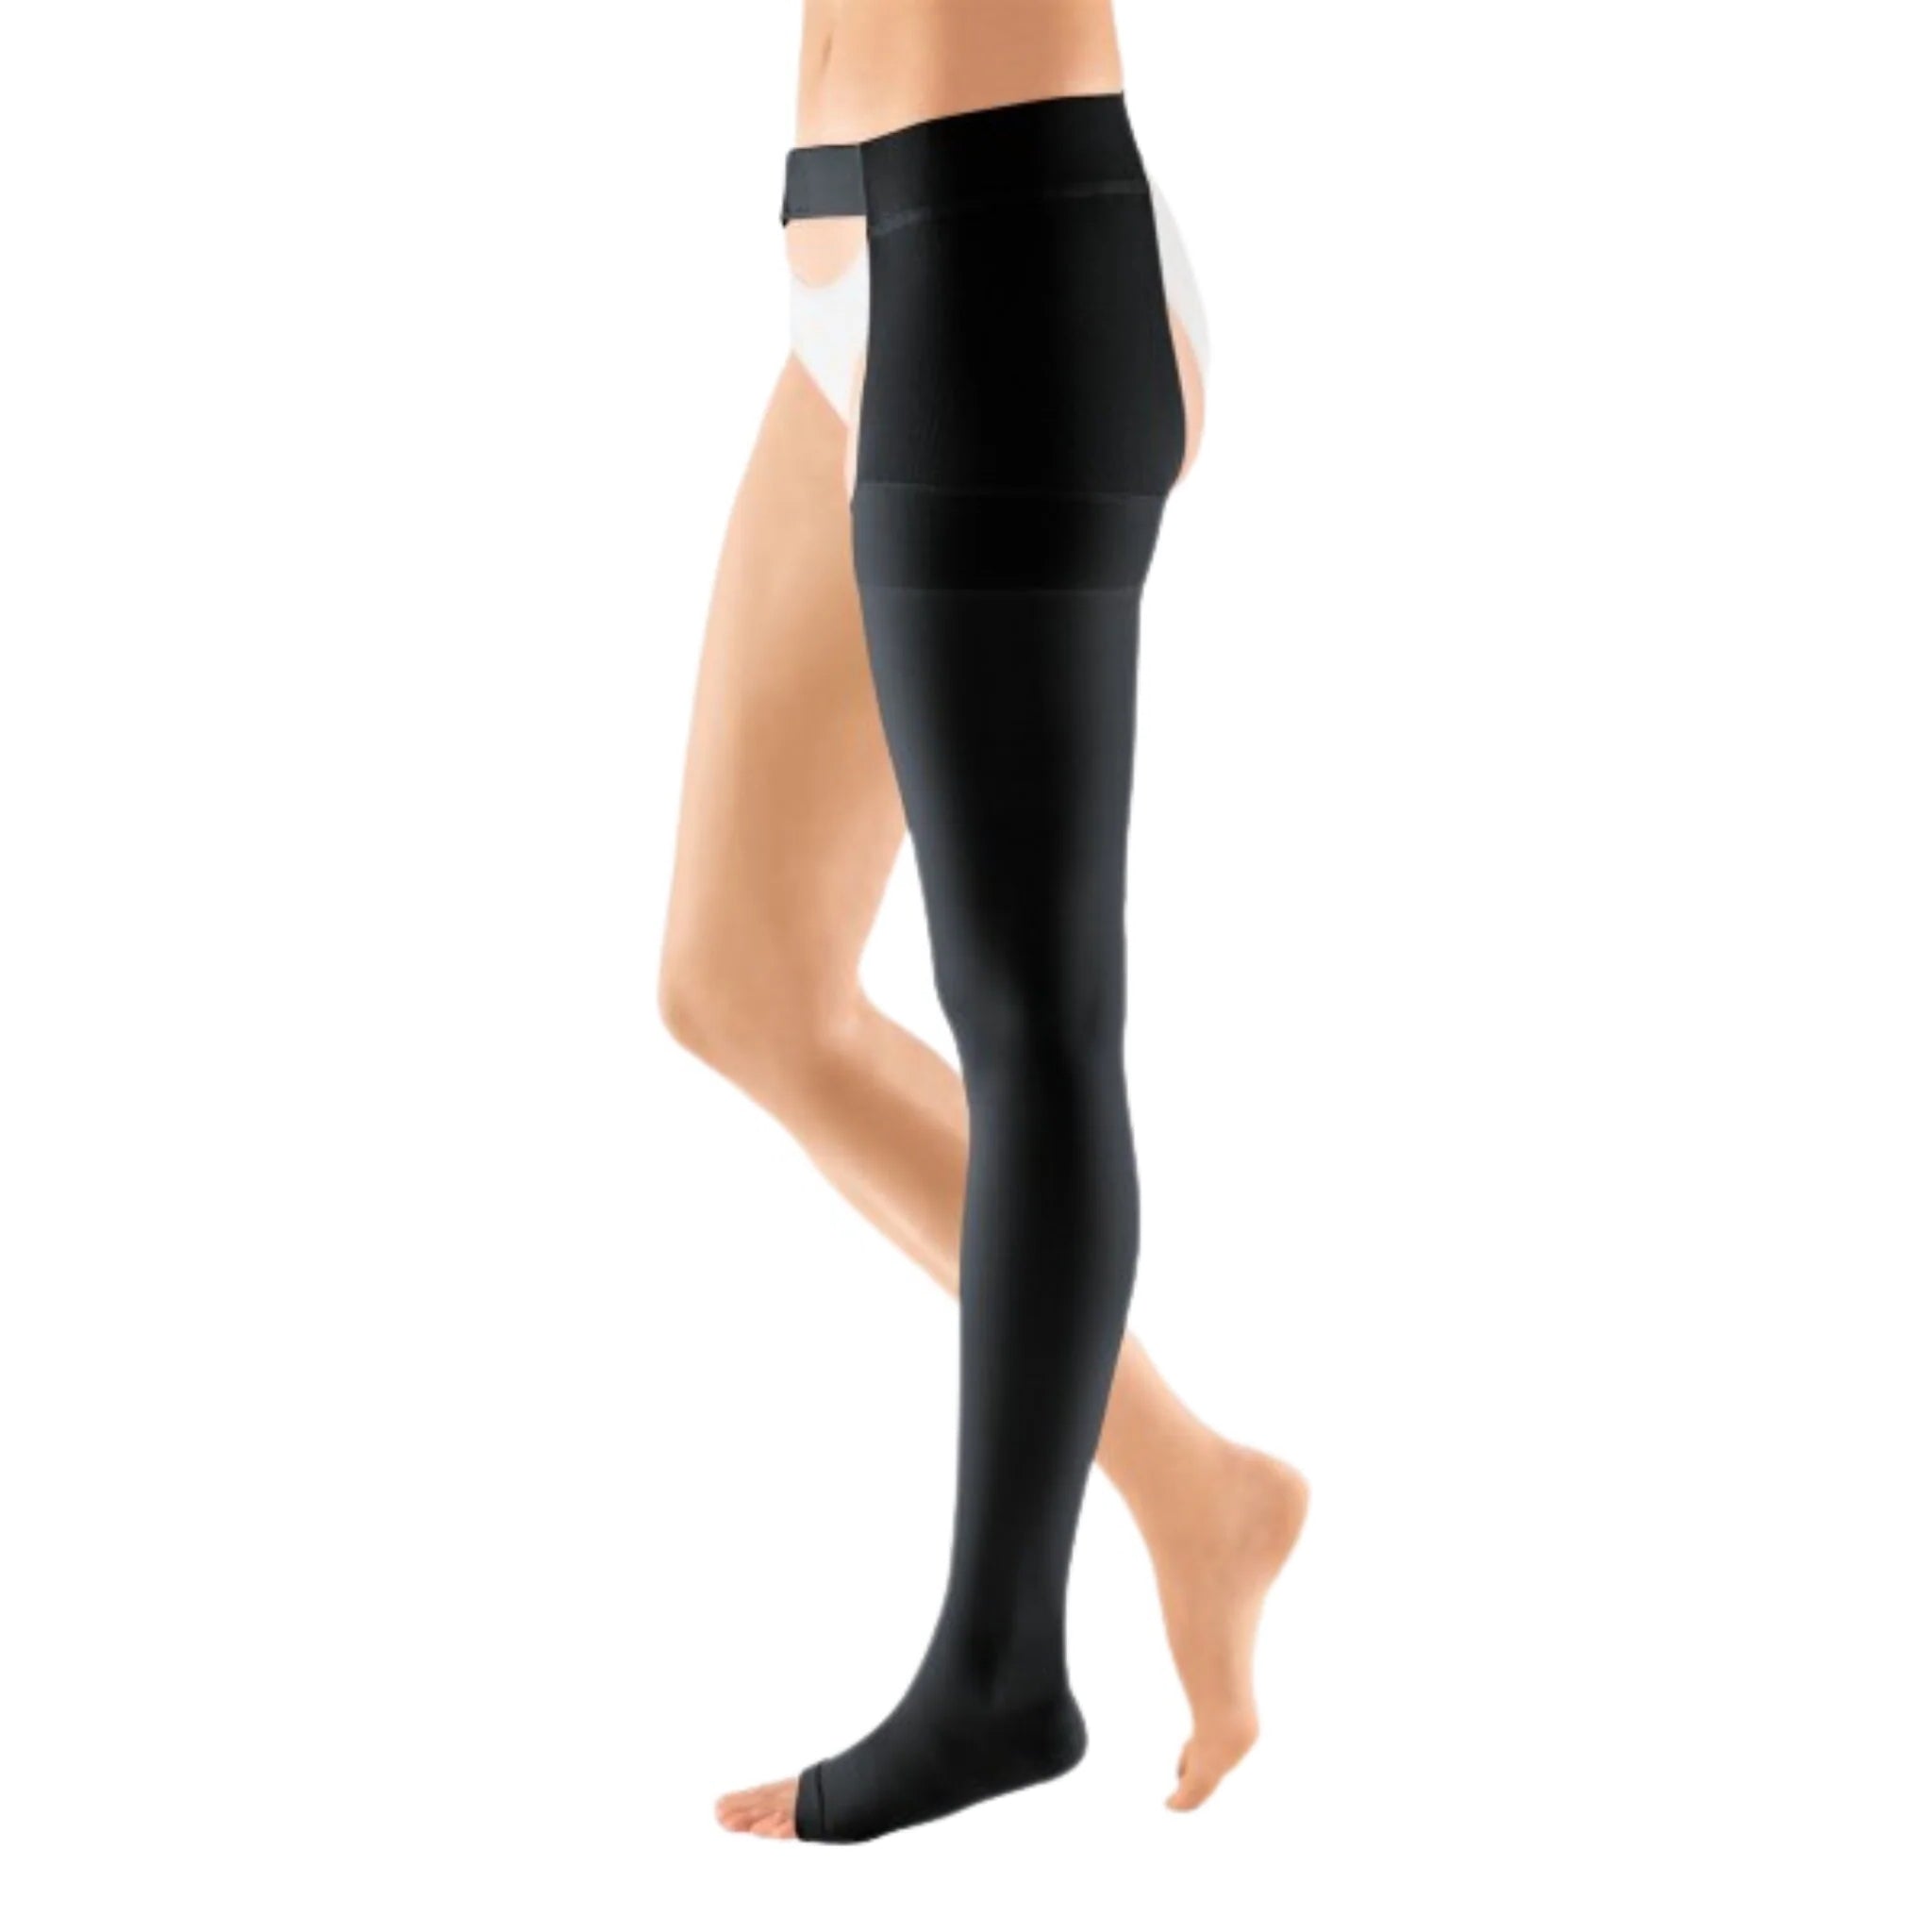 mediven plus® Thigh High Open Toe Compression Stocking + Waist Attachment Black